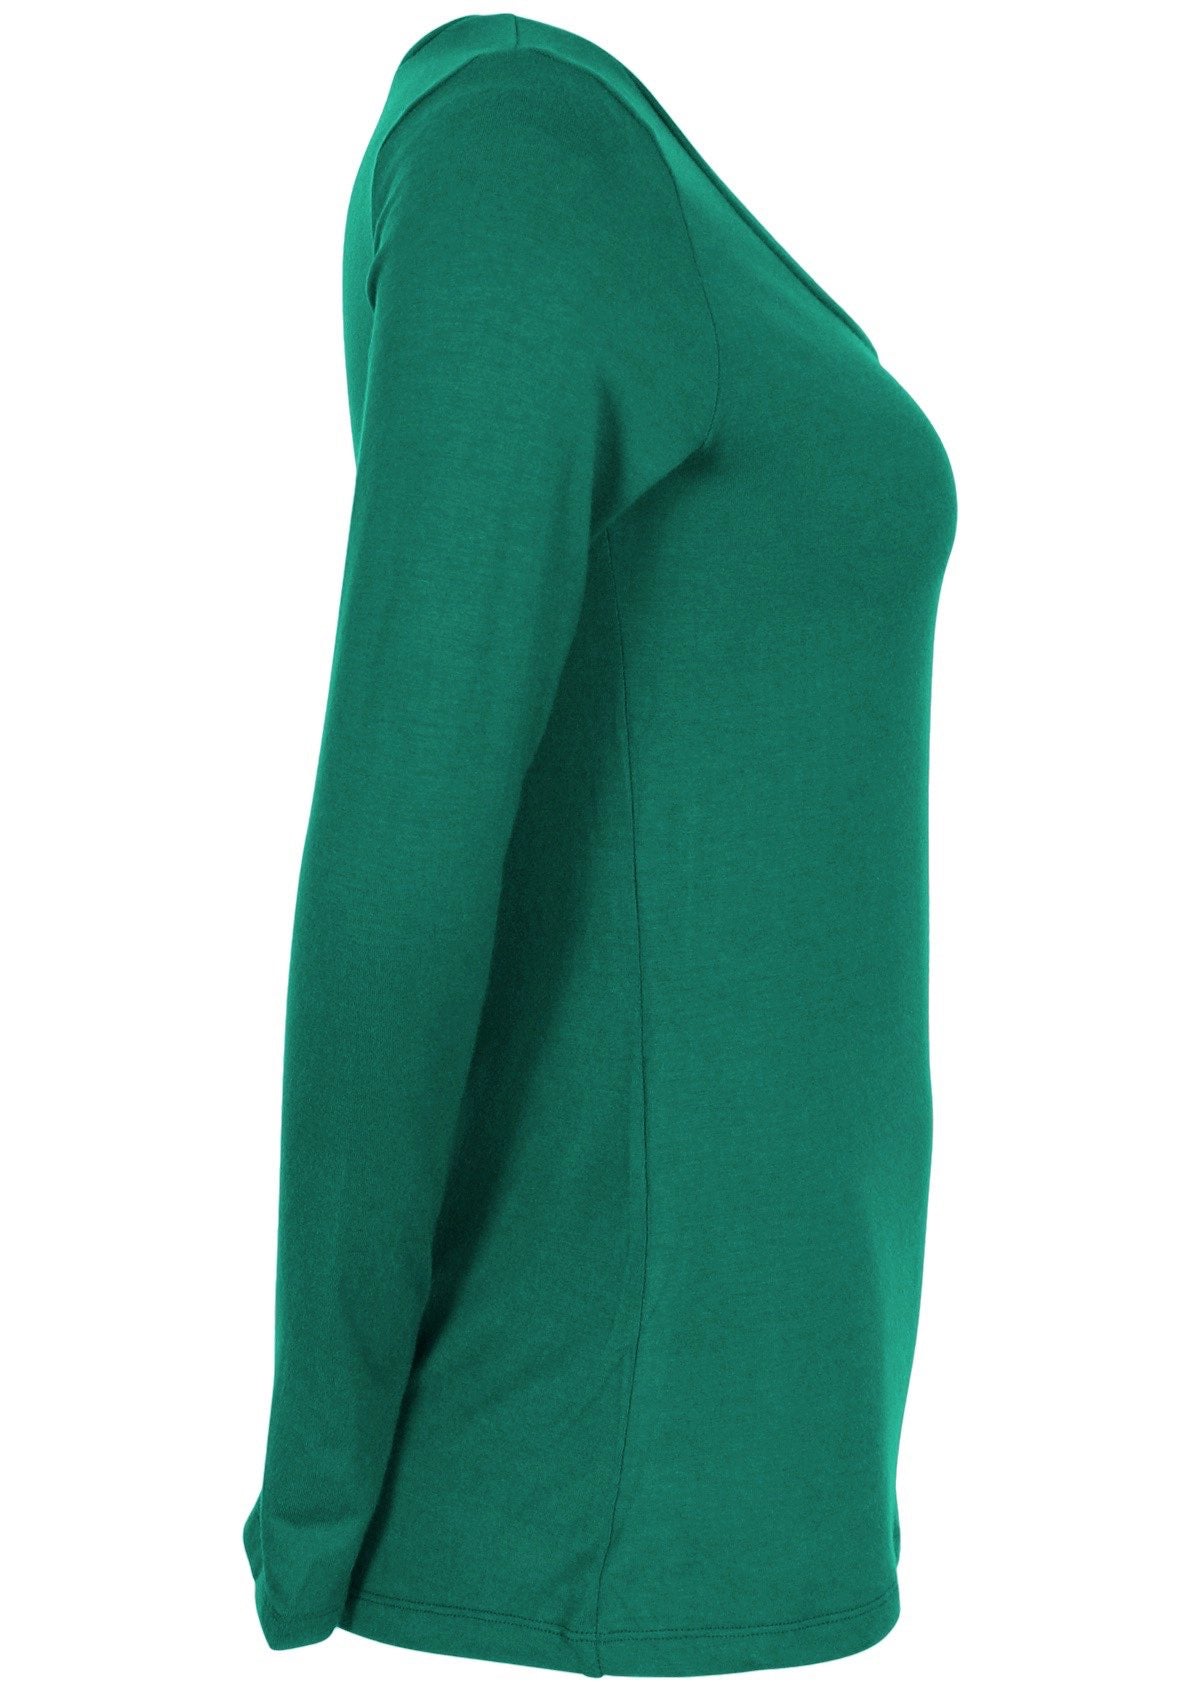 side view long sleeve women's top green